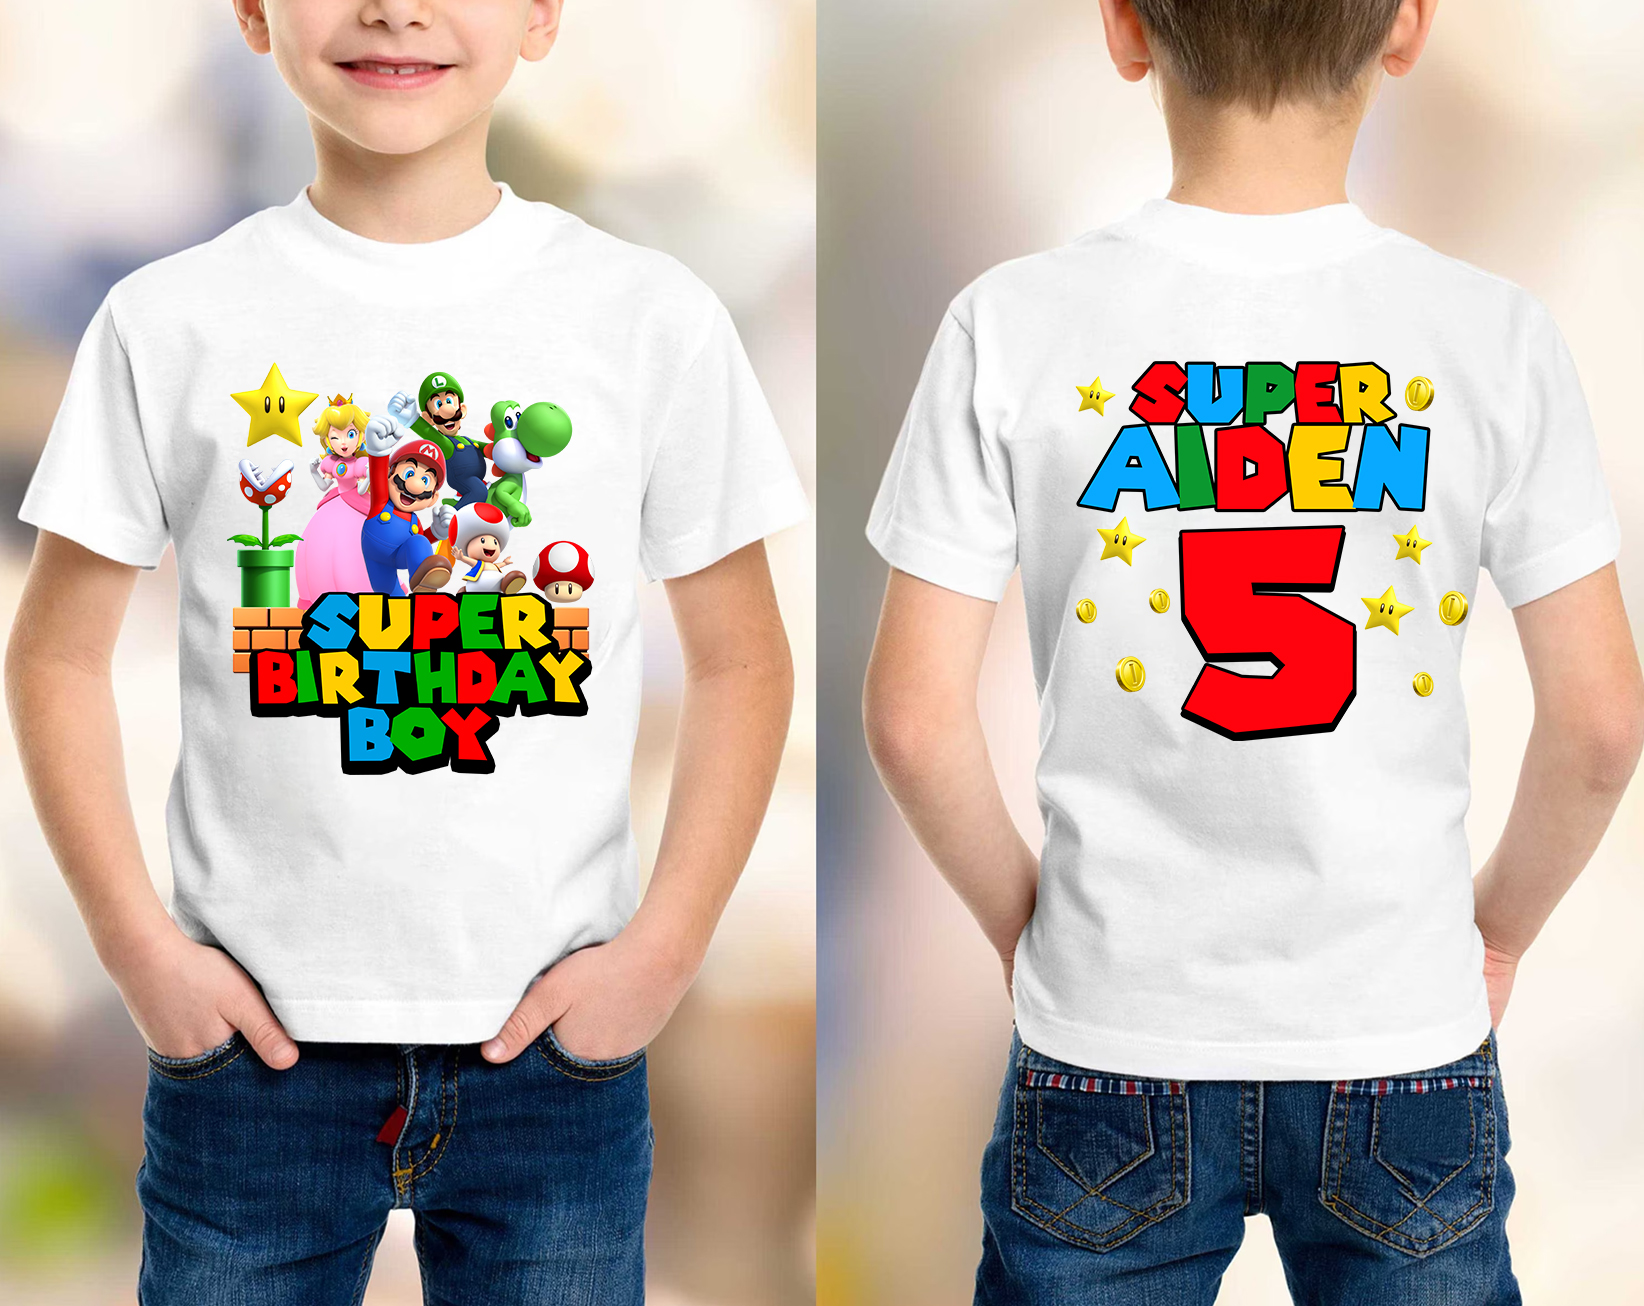 Super Mario Birthday Shirt, Custom Super Mario Shirt, Family Matching shirts, Mario Shirt, Mario Party theme